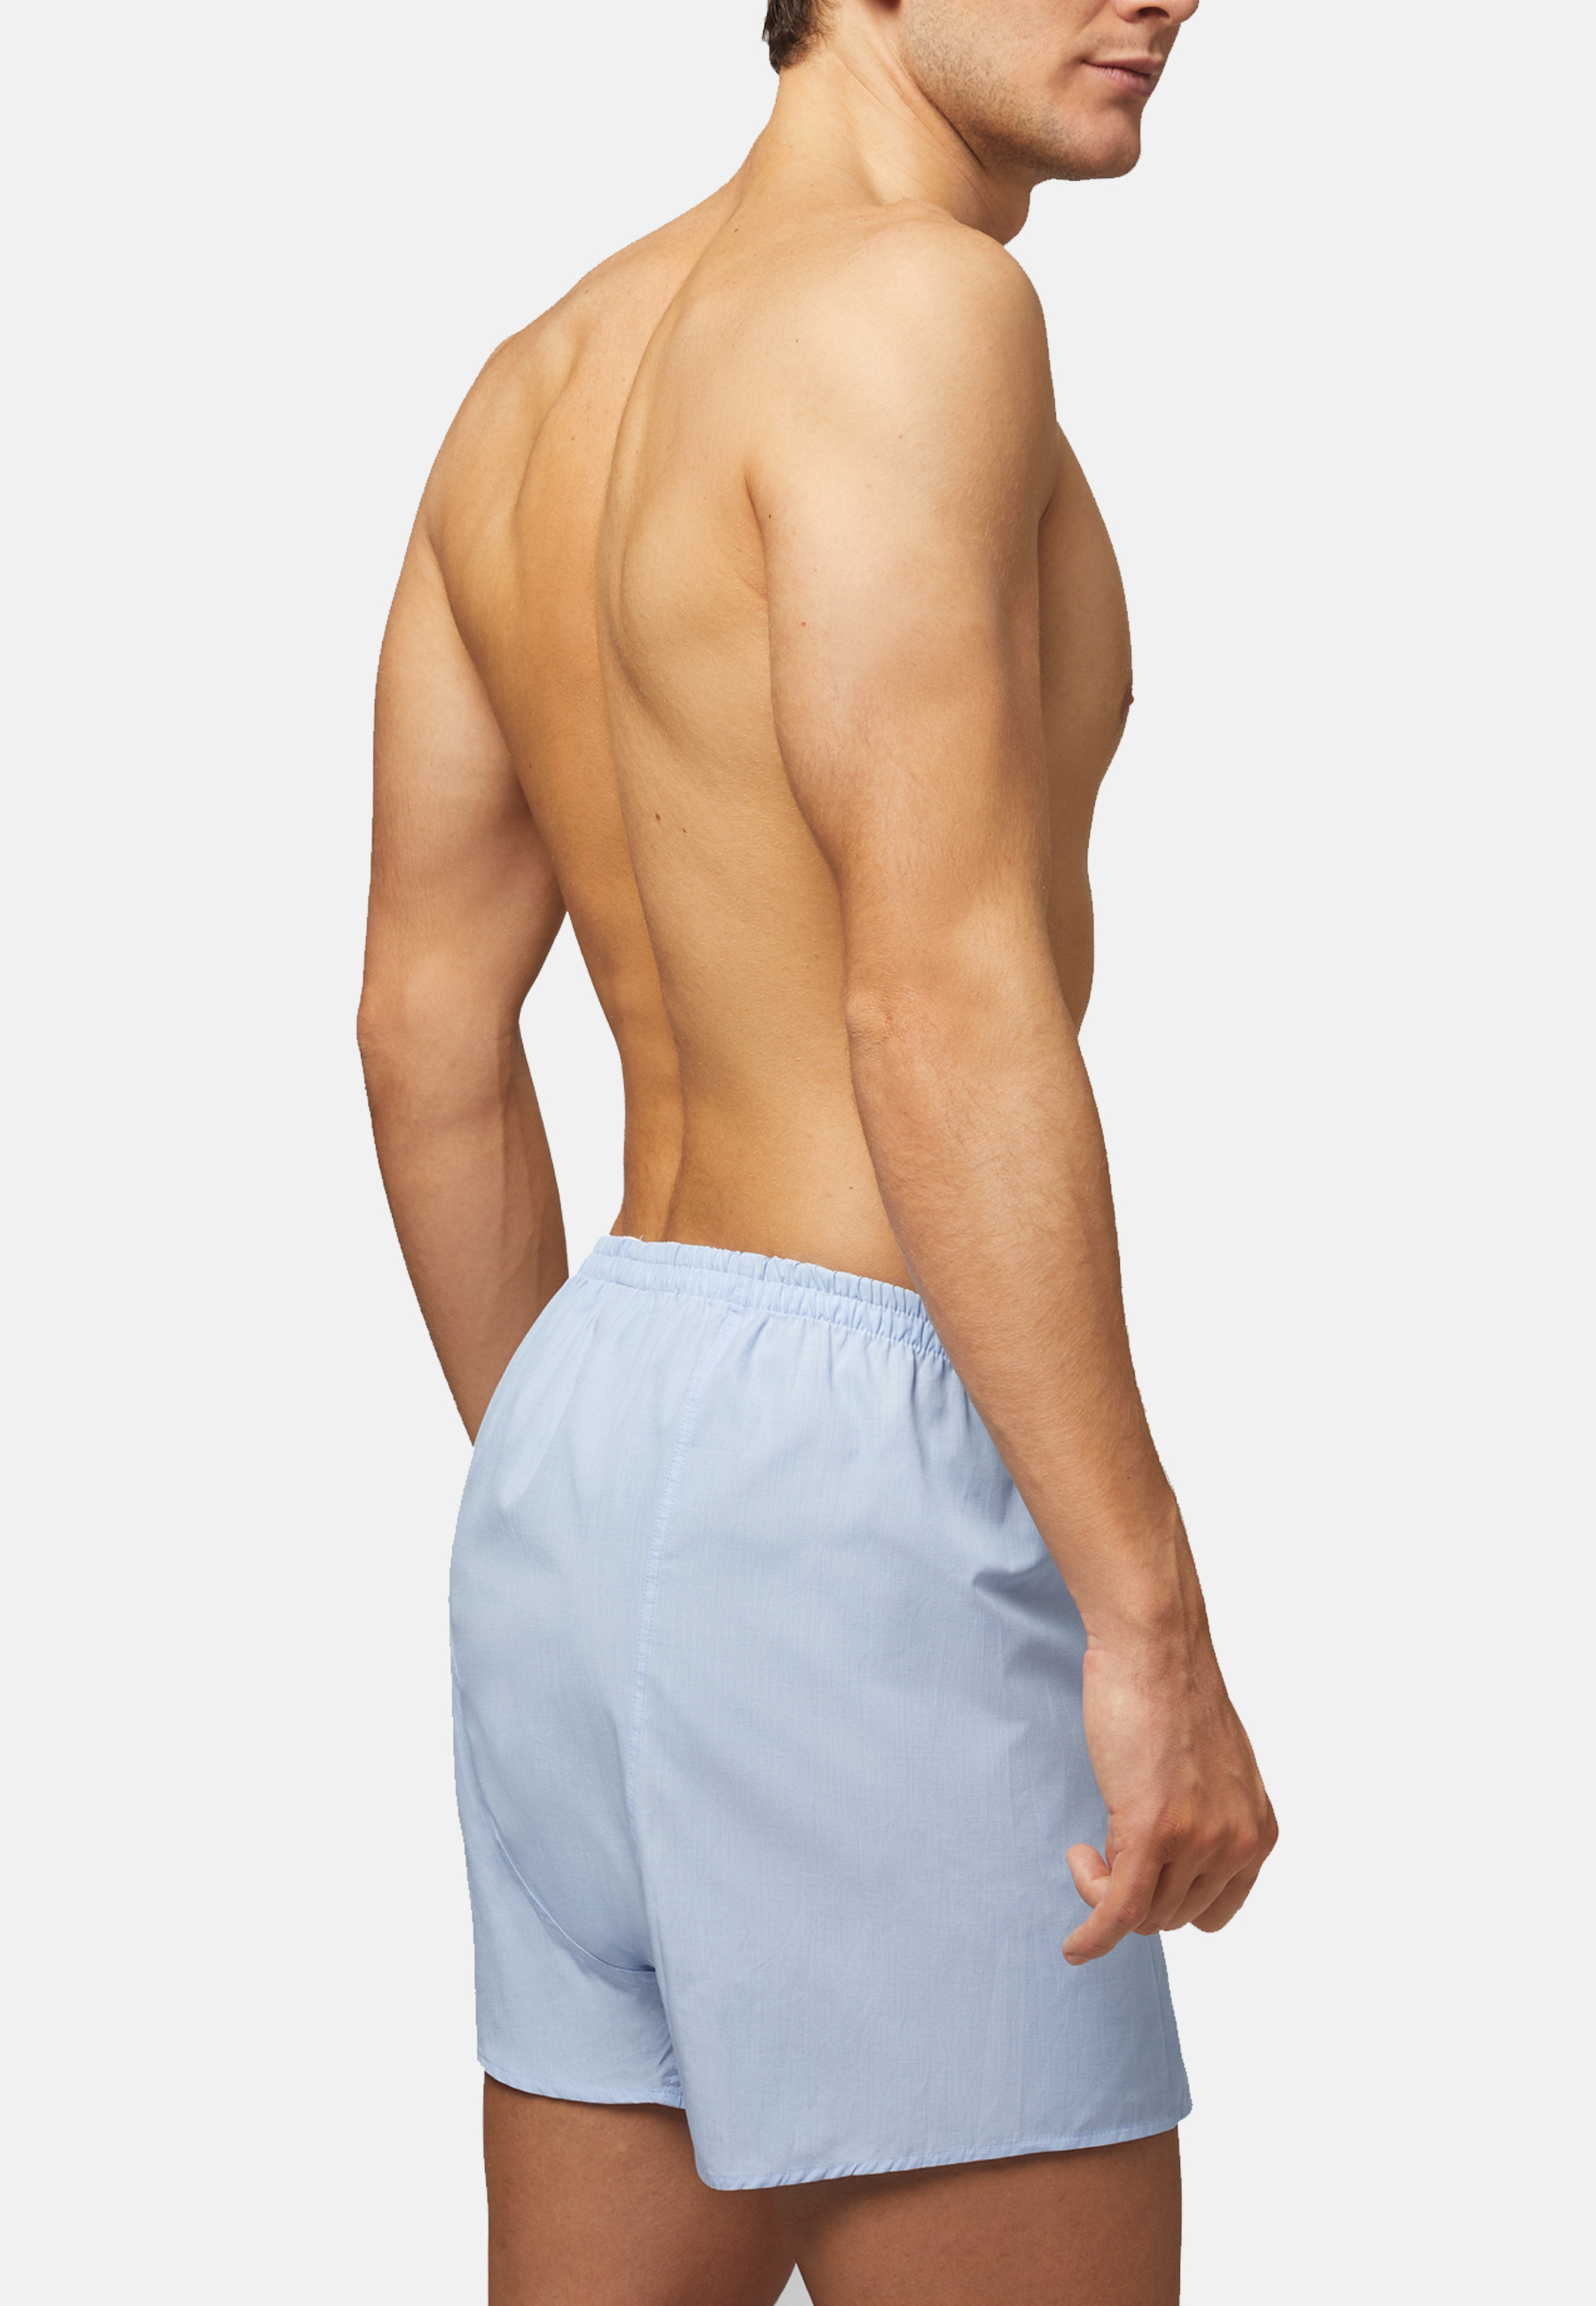 GOMOMOosh 221205 100% Cotton Boxer Panty Shorts For Boys Beach